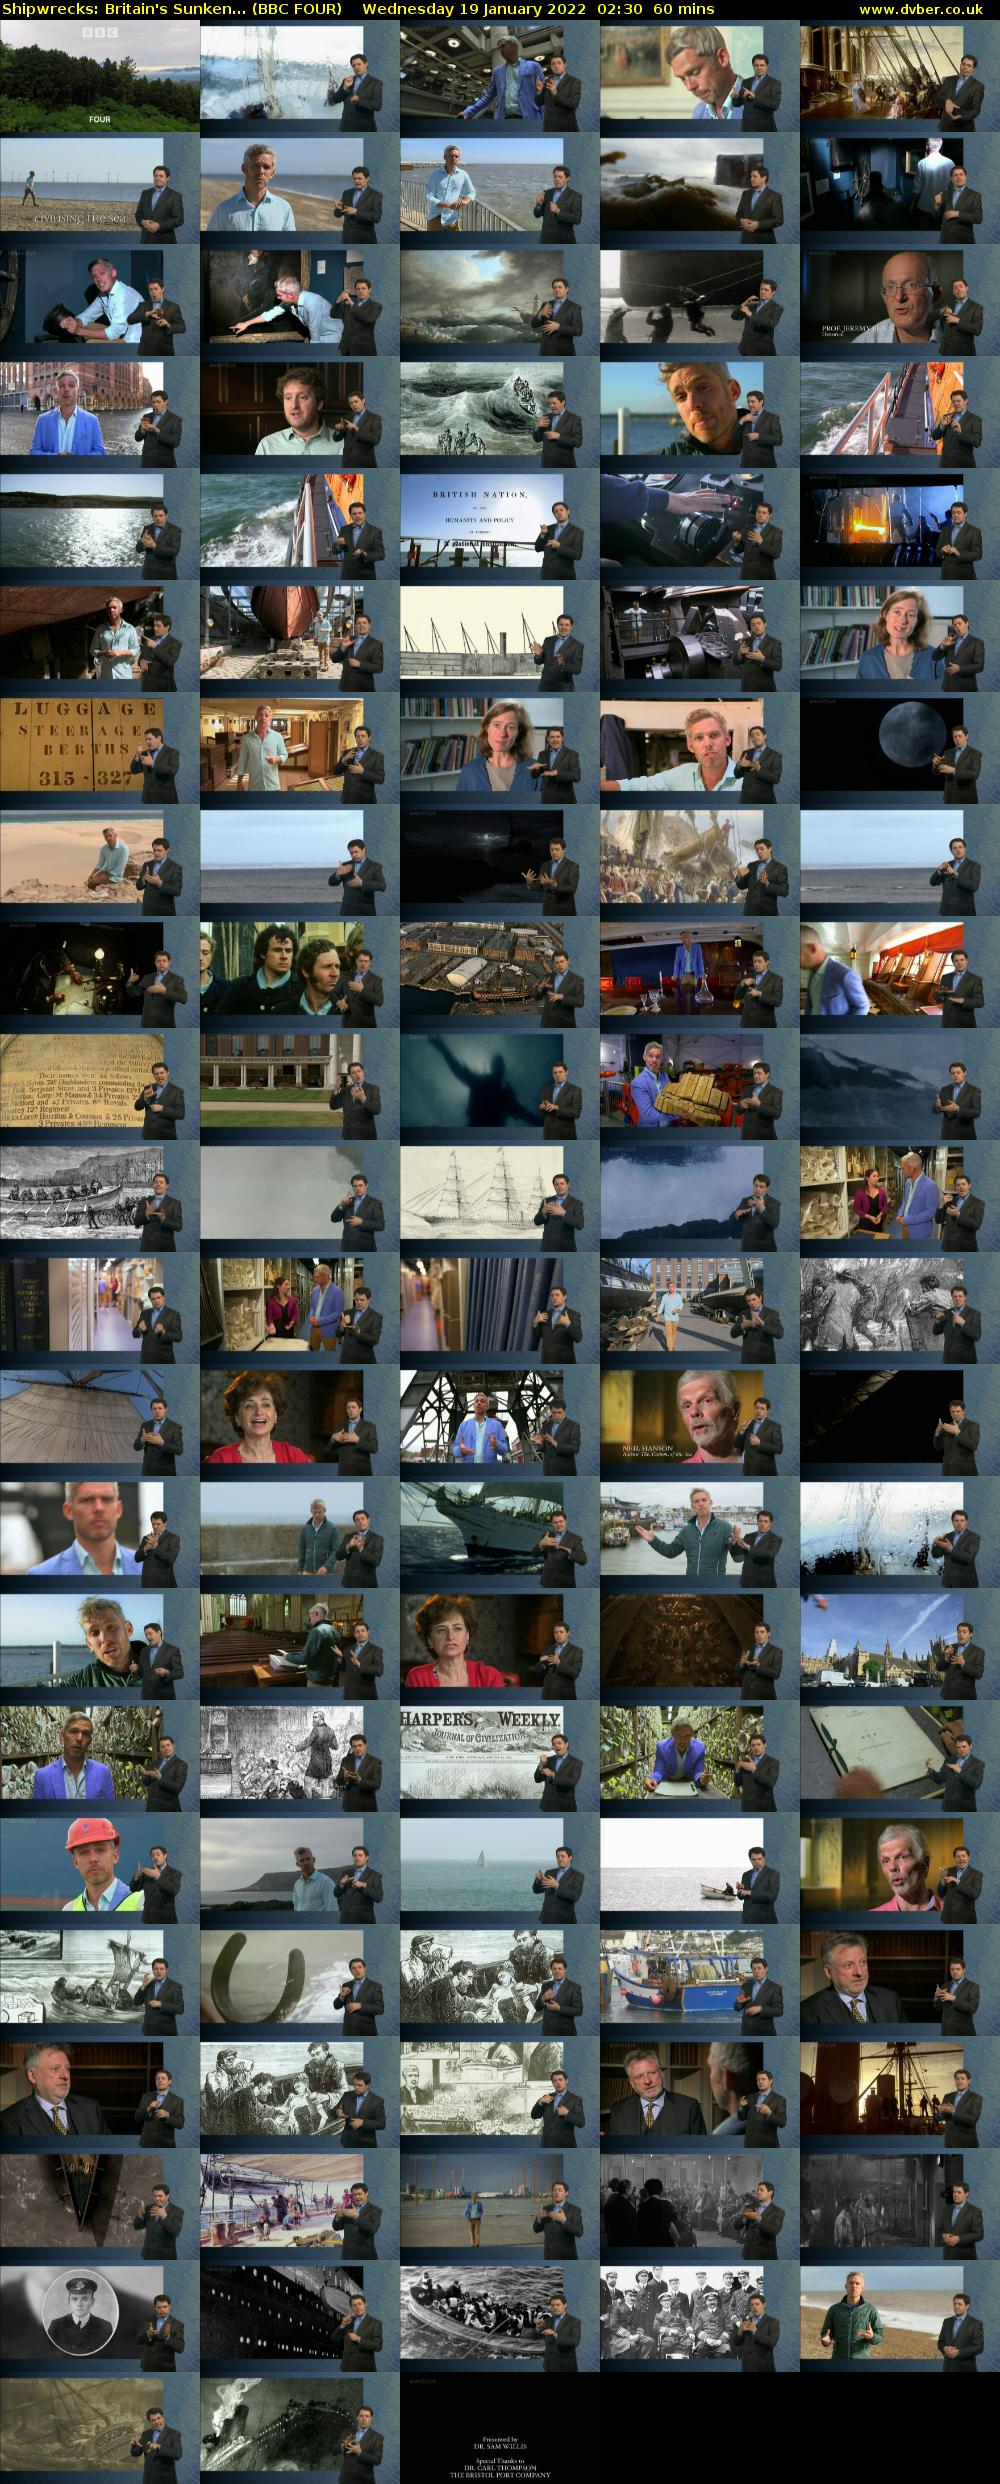 Shipwrecks: Britain's Sunken... (BBC FOUR) Wednesday 19 January 2022 02:30 - 03:30